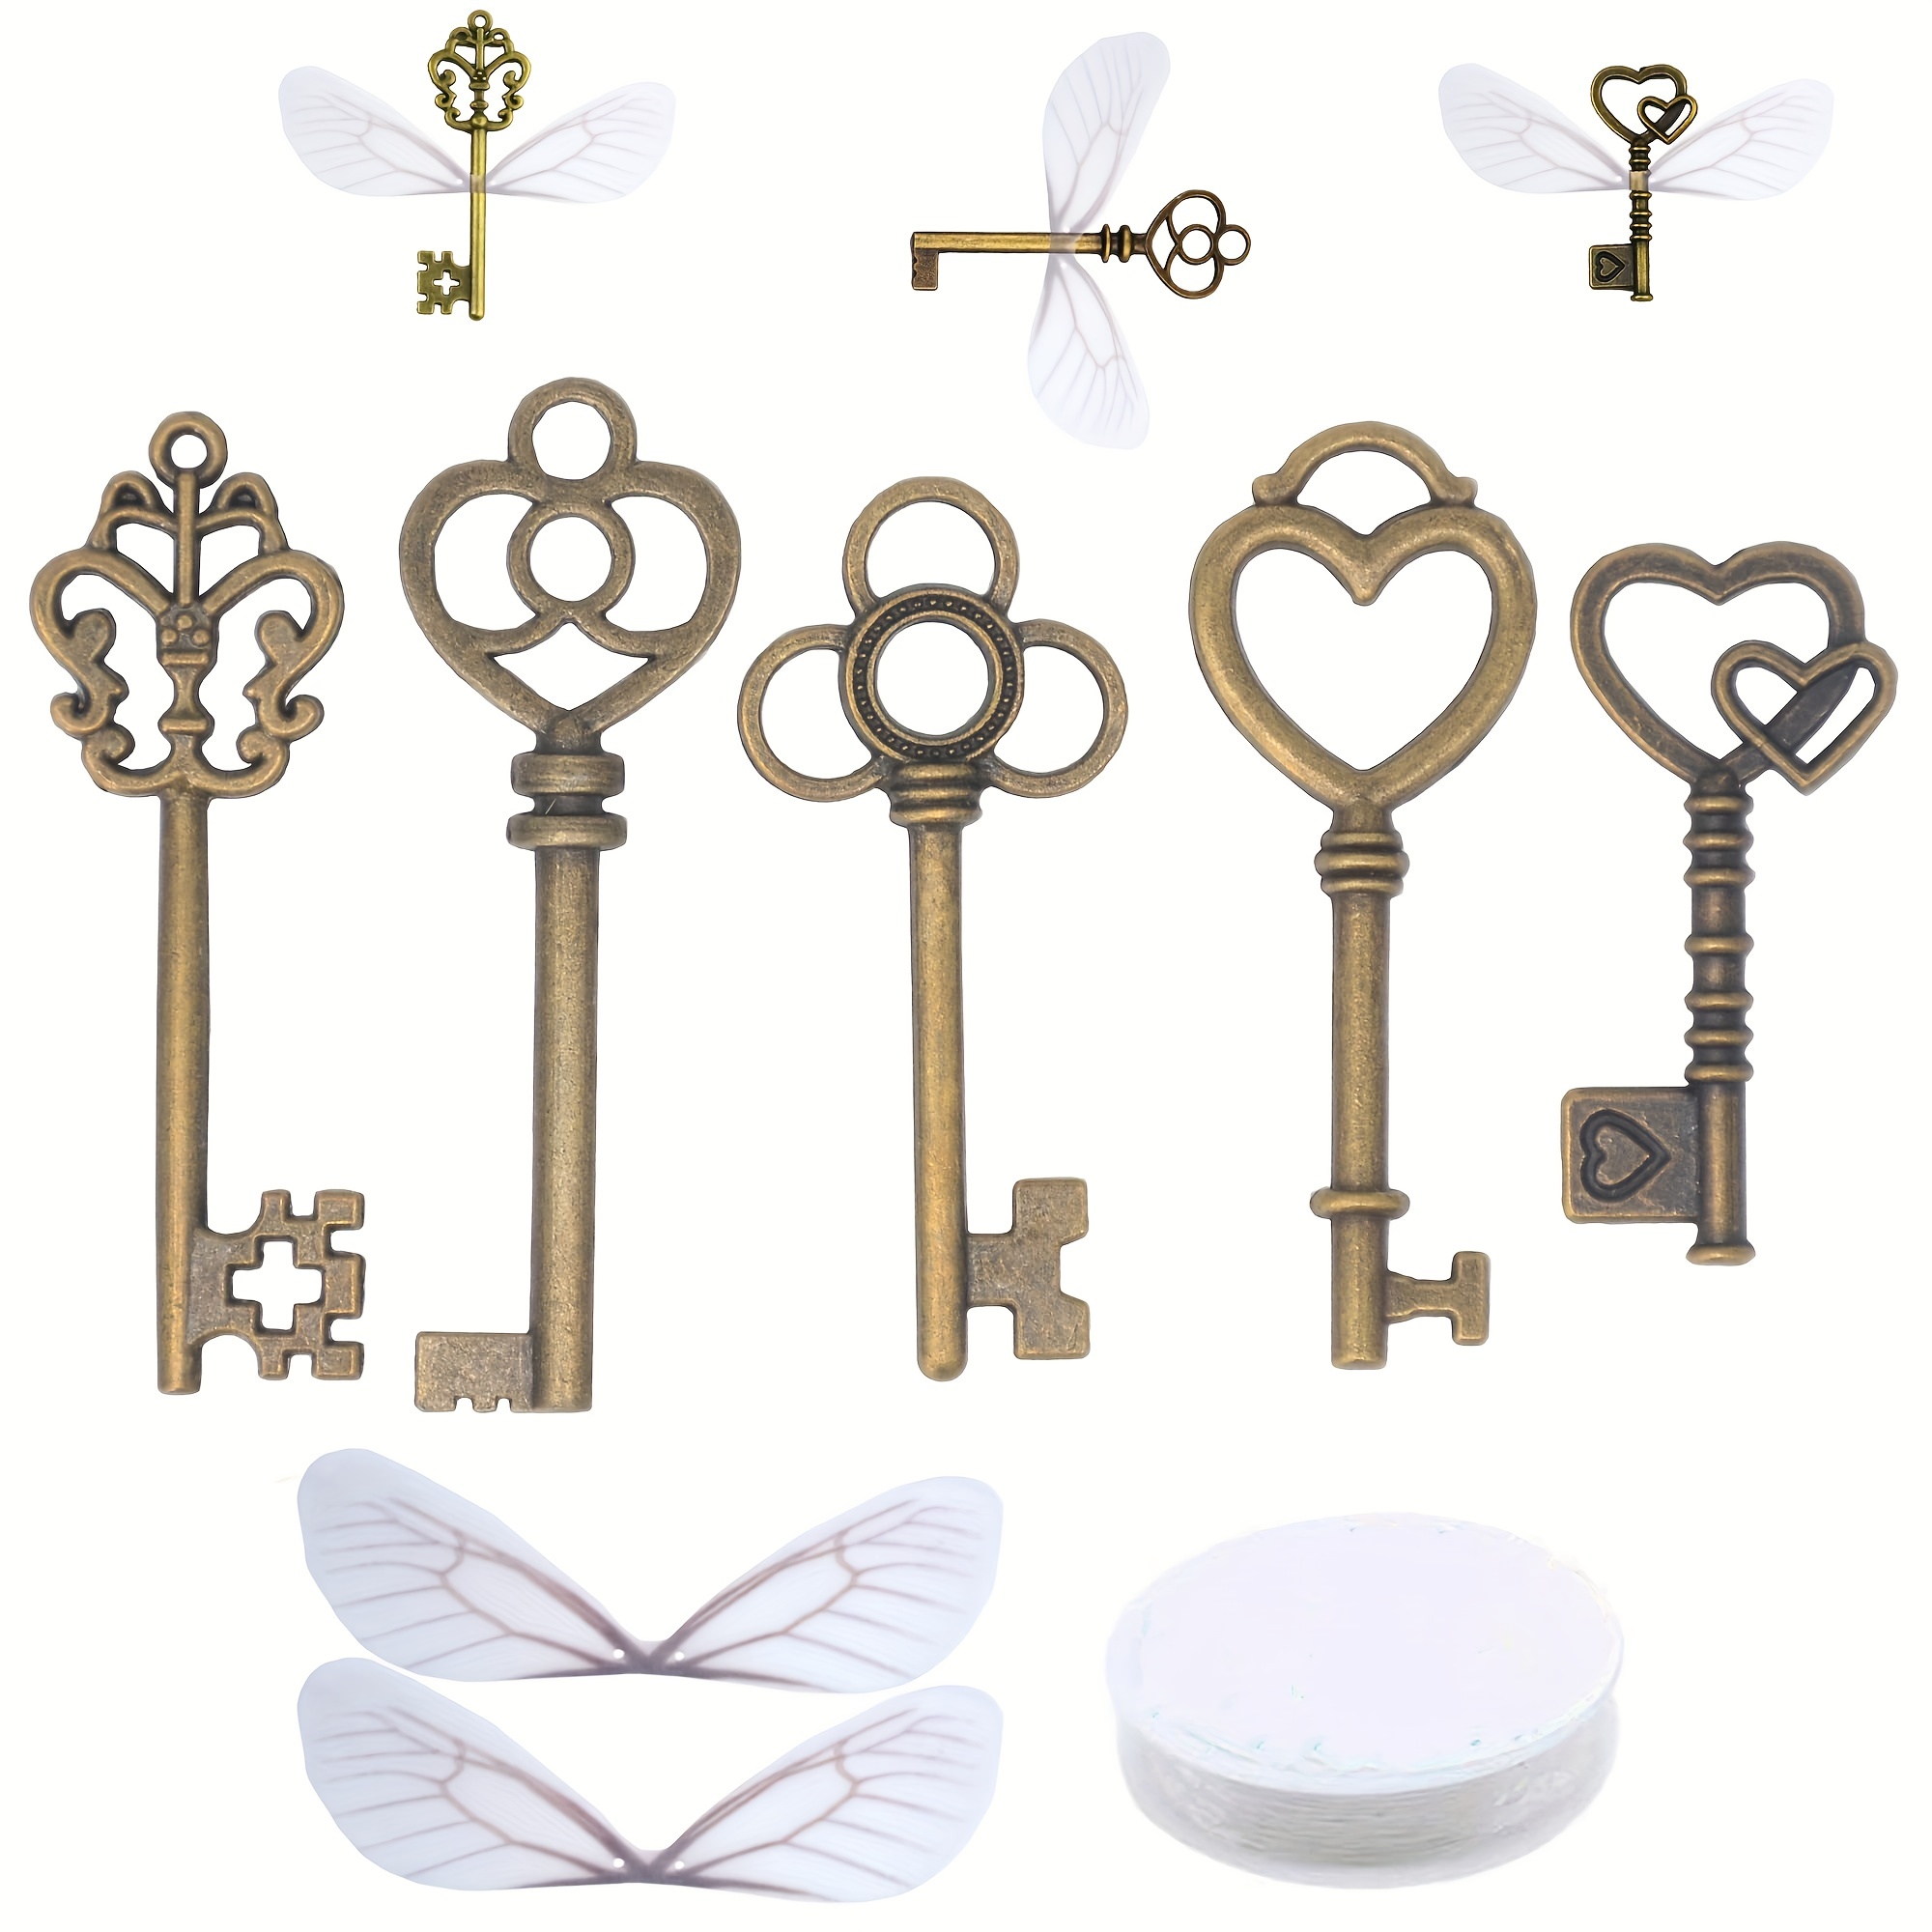 XONOR ys100705 24pcs Large Antique Bronze Skeleton Keys Rustic Key for Wedding Decoration Favor